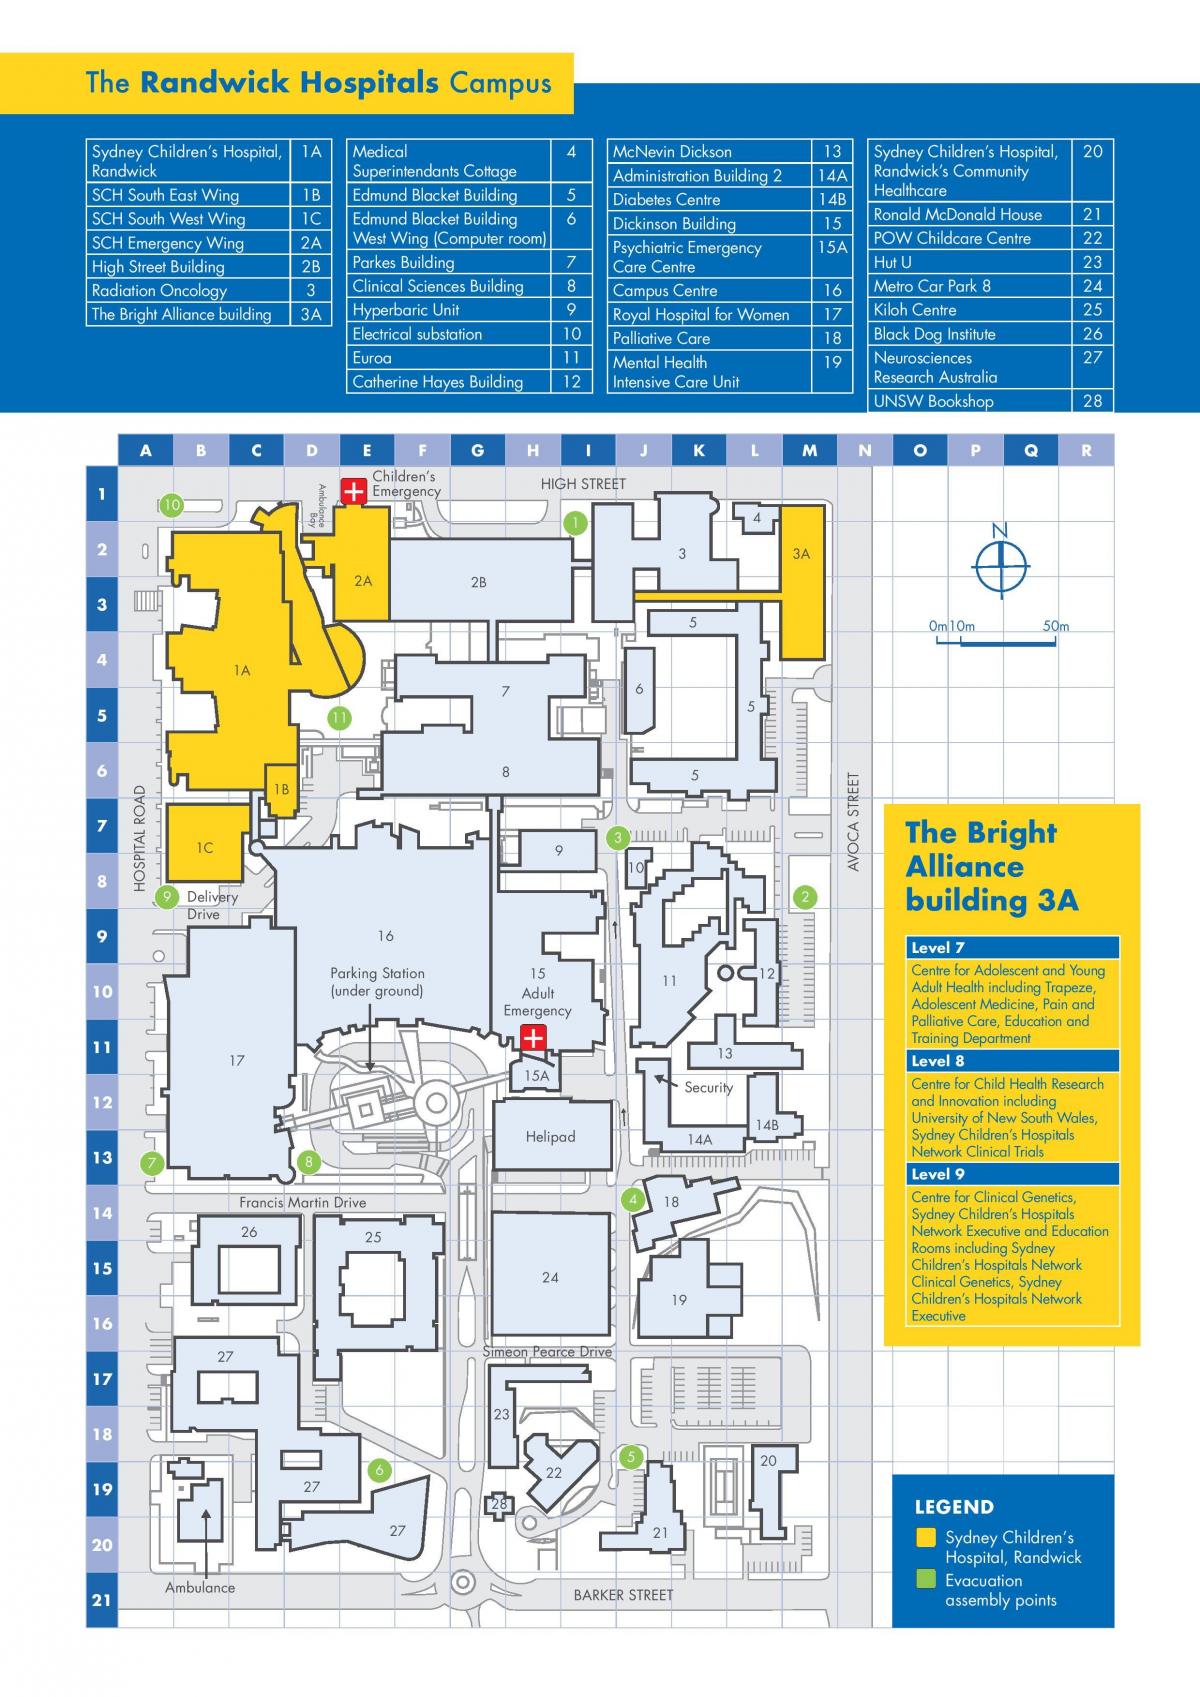 sydney children's hospital randwick map